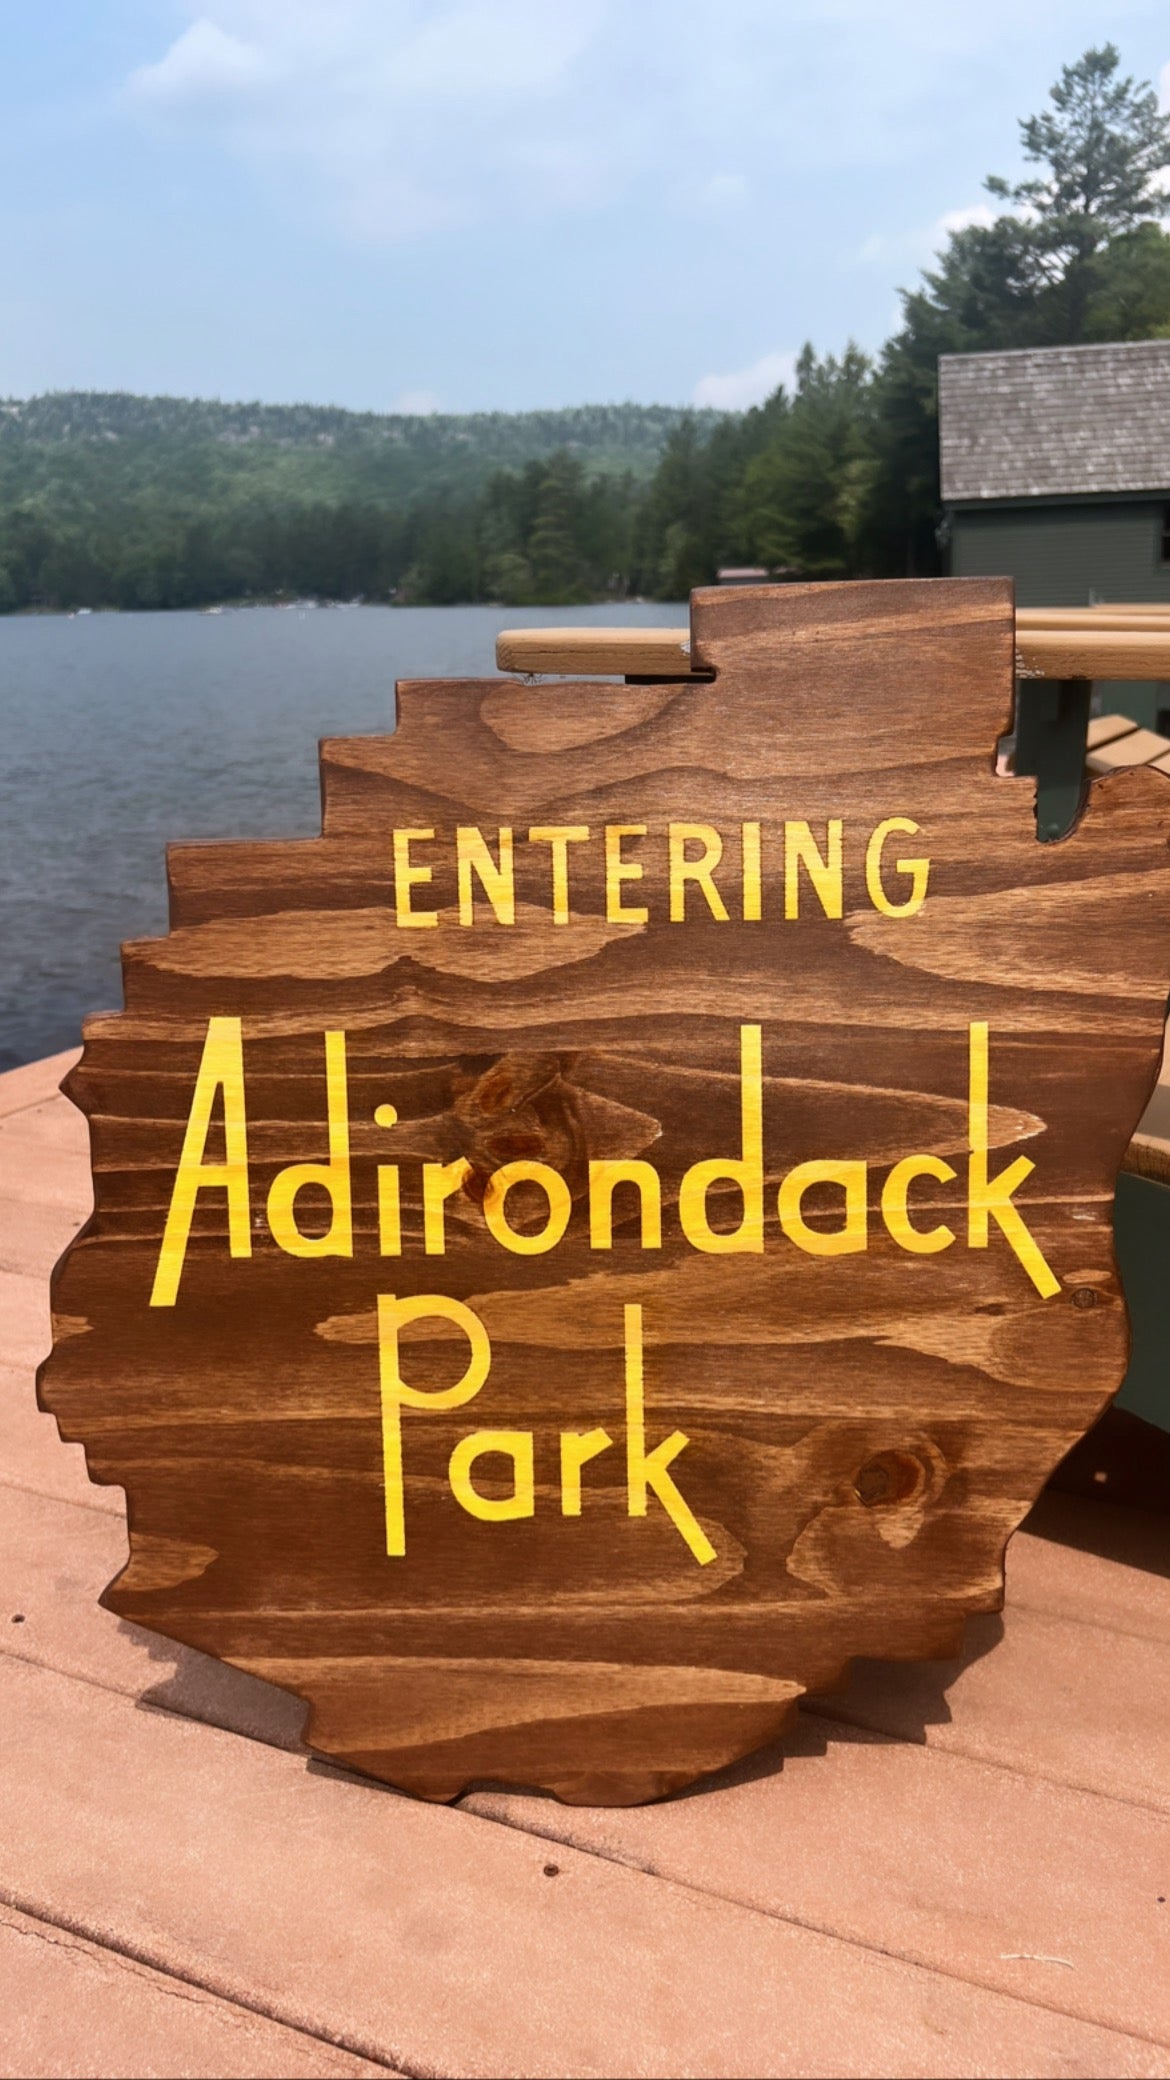 “Entering Adirondack Park” Sign